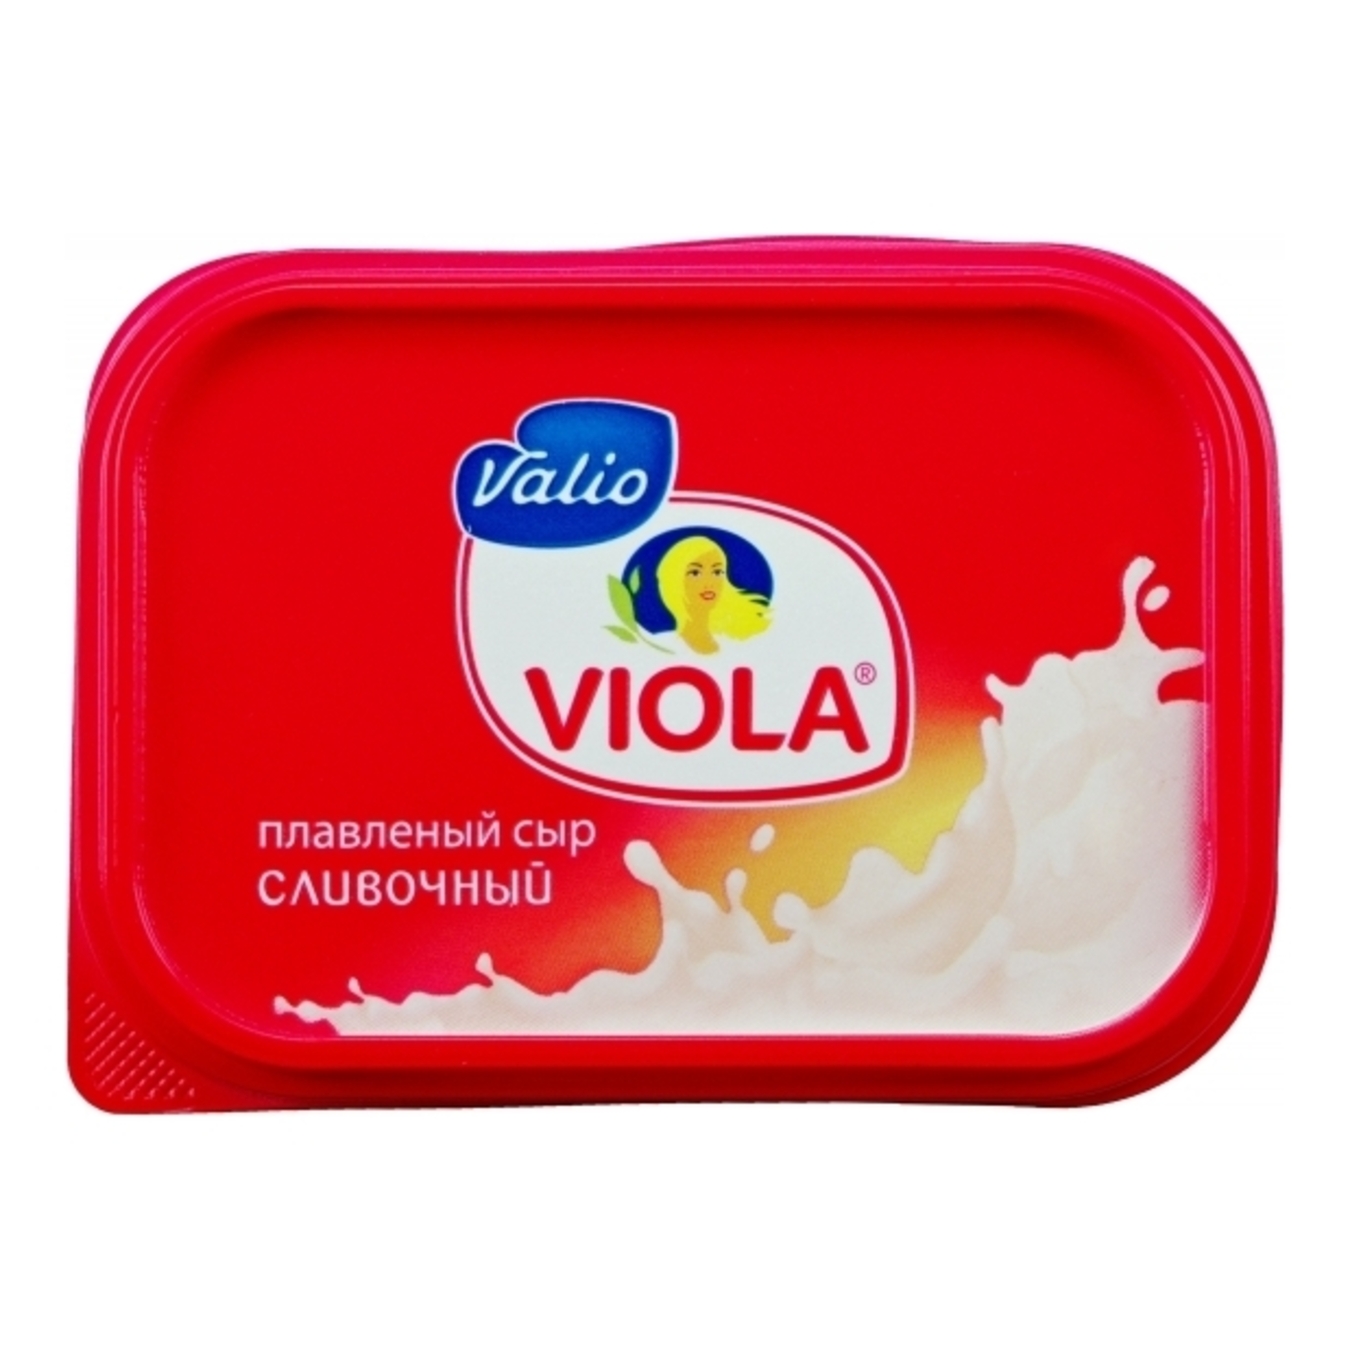 Valio Viola Creamy Processed Cheese 0,6 400g